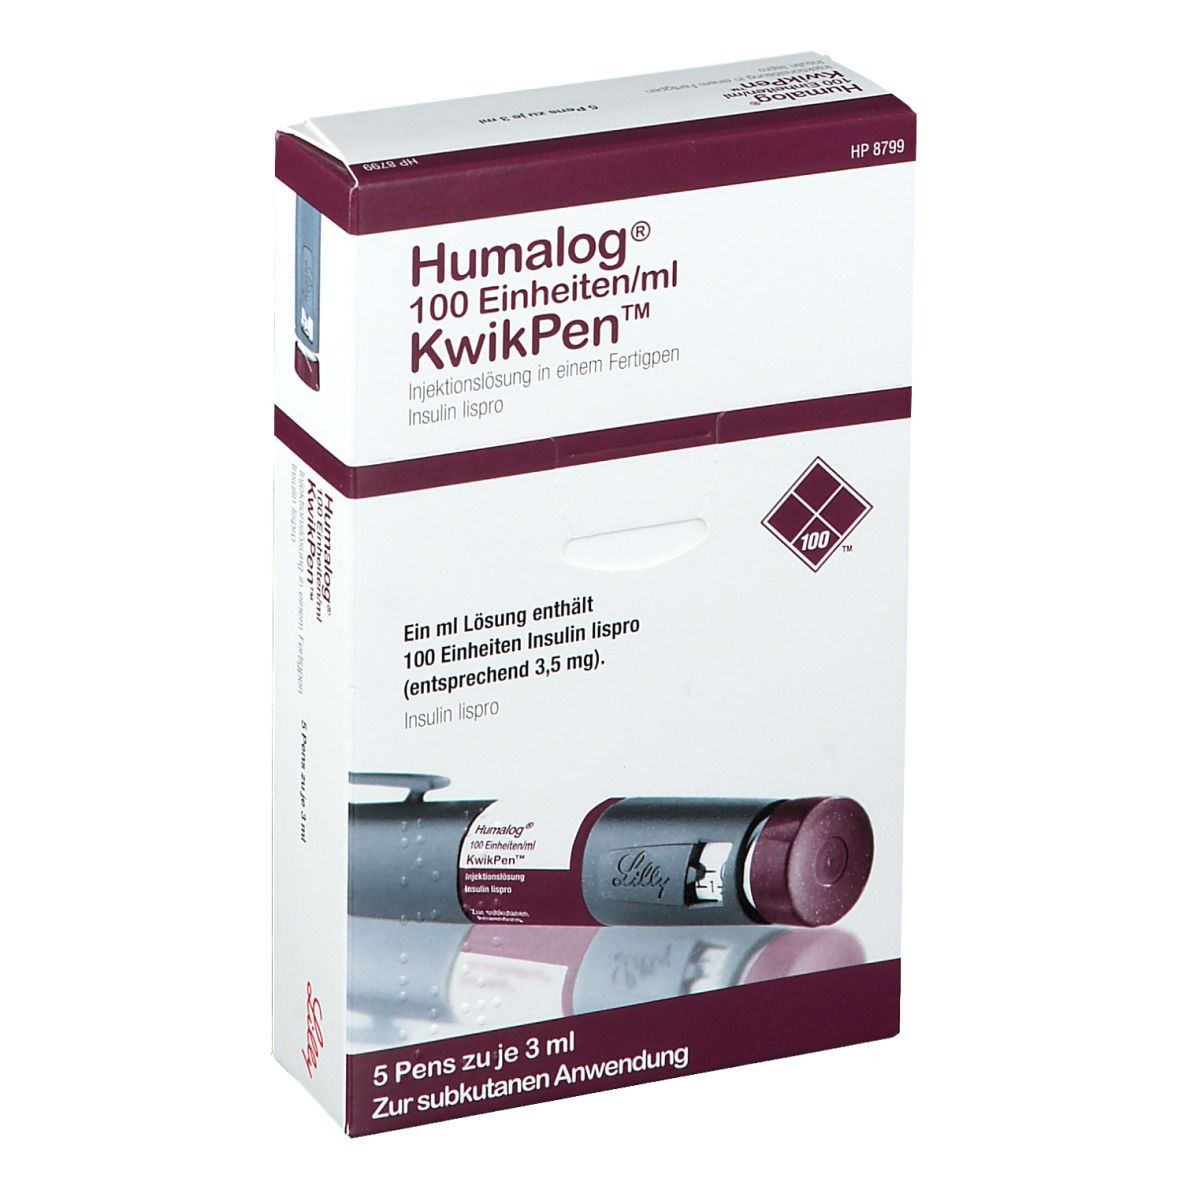 Humalog® 100 Einheiten/ml KwikPen™